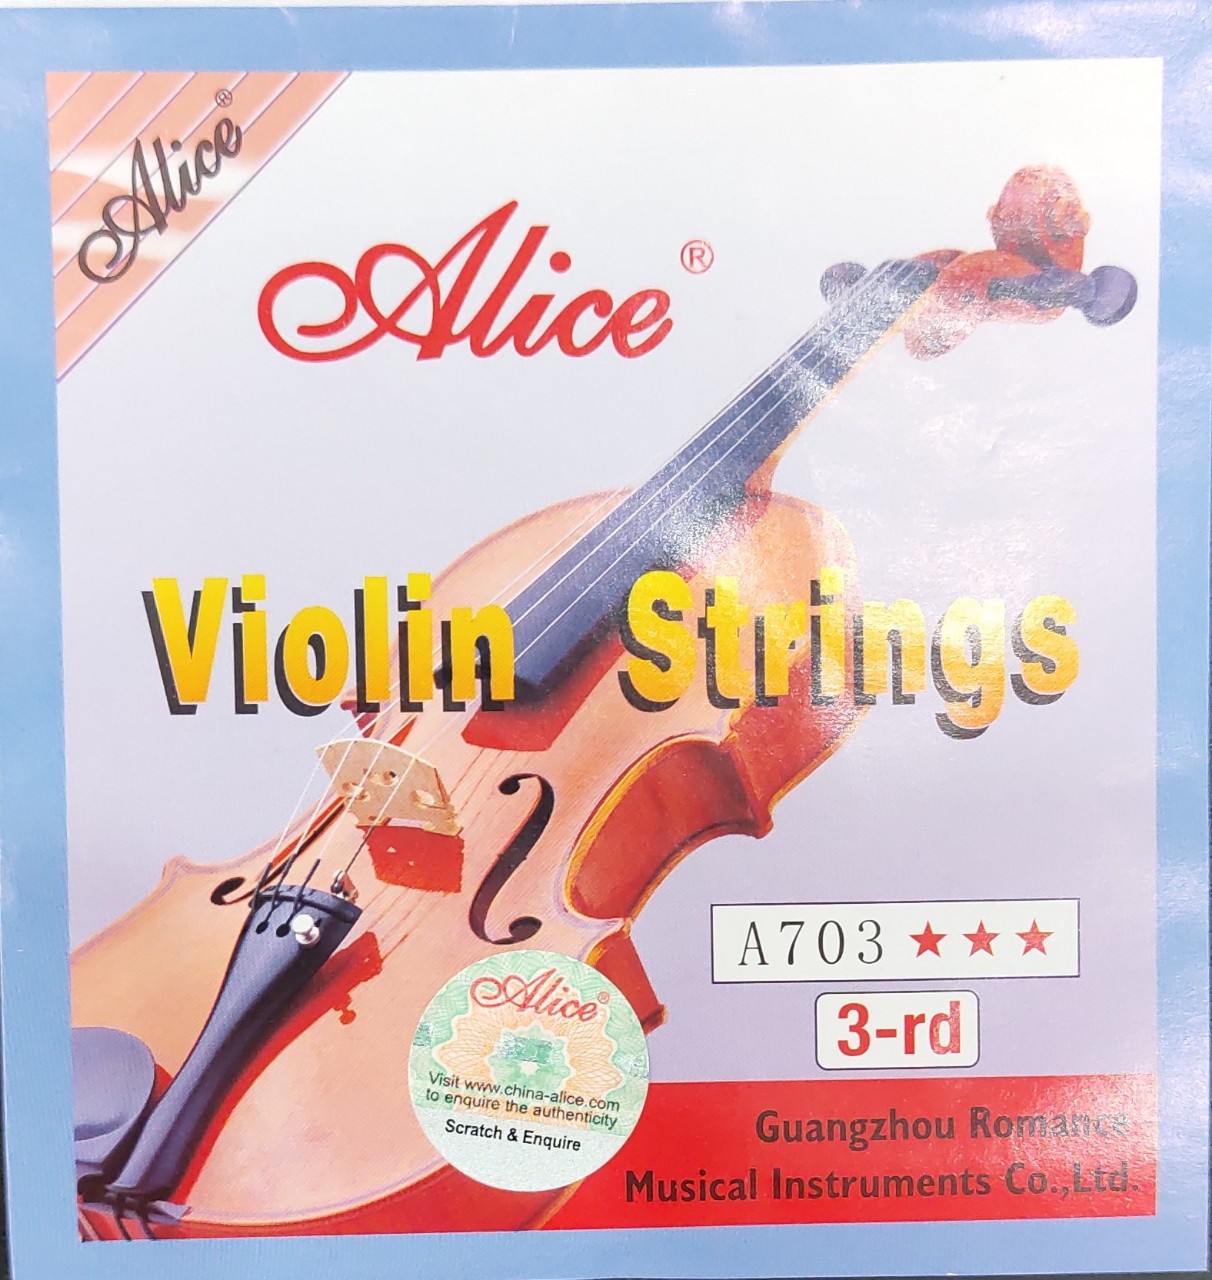 Dây violin lẻ số 3-rd Alice A703